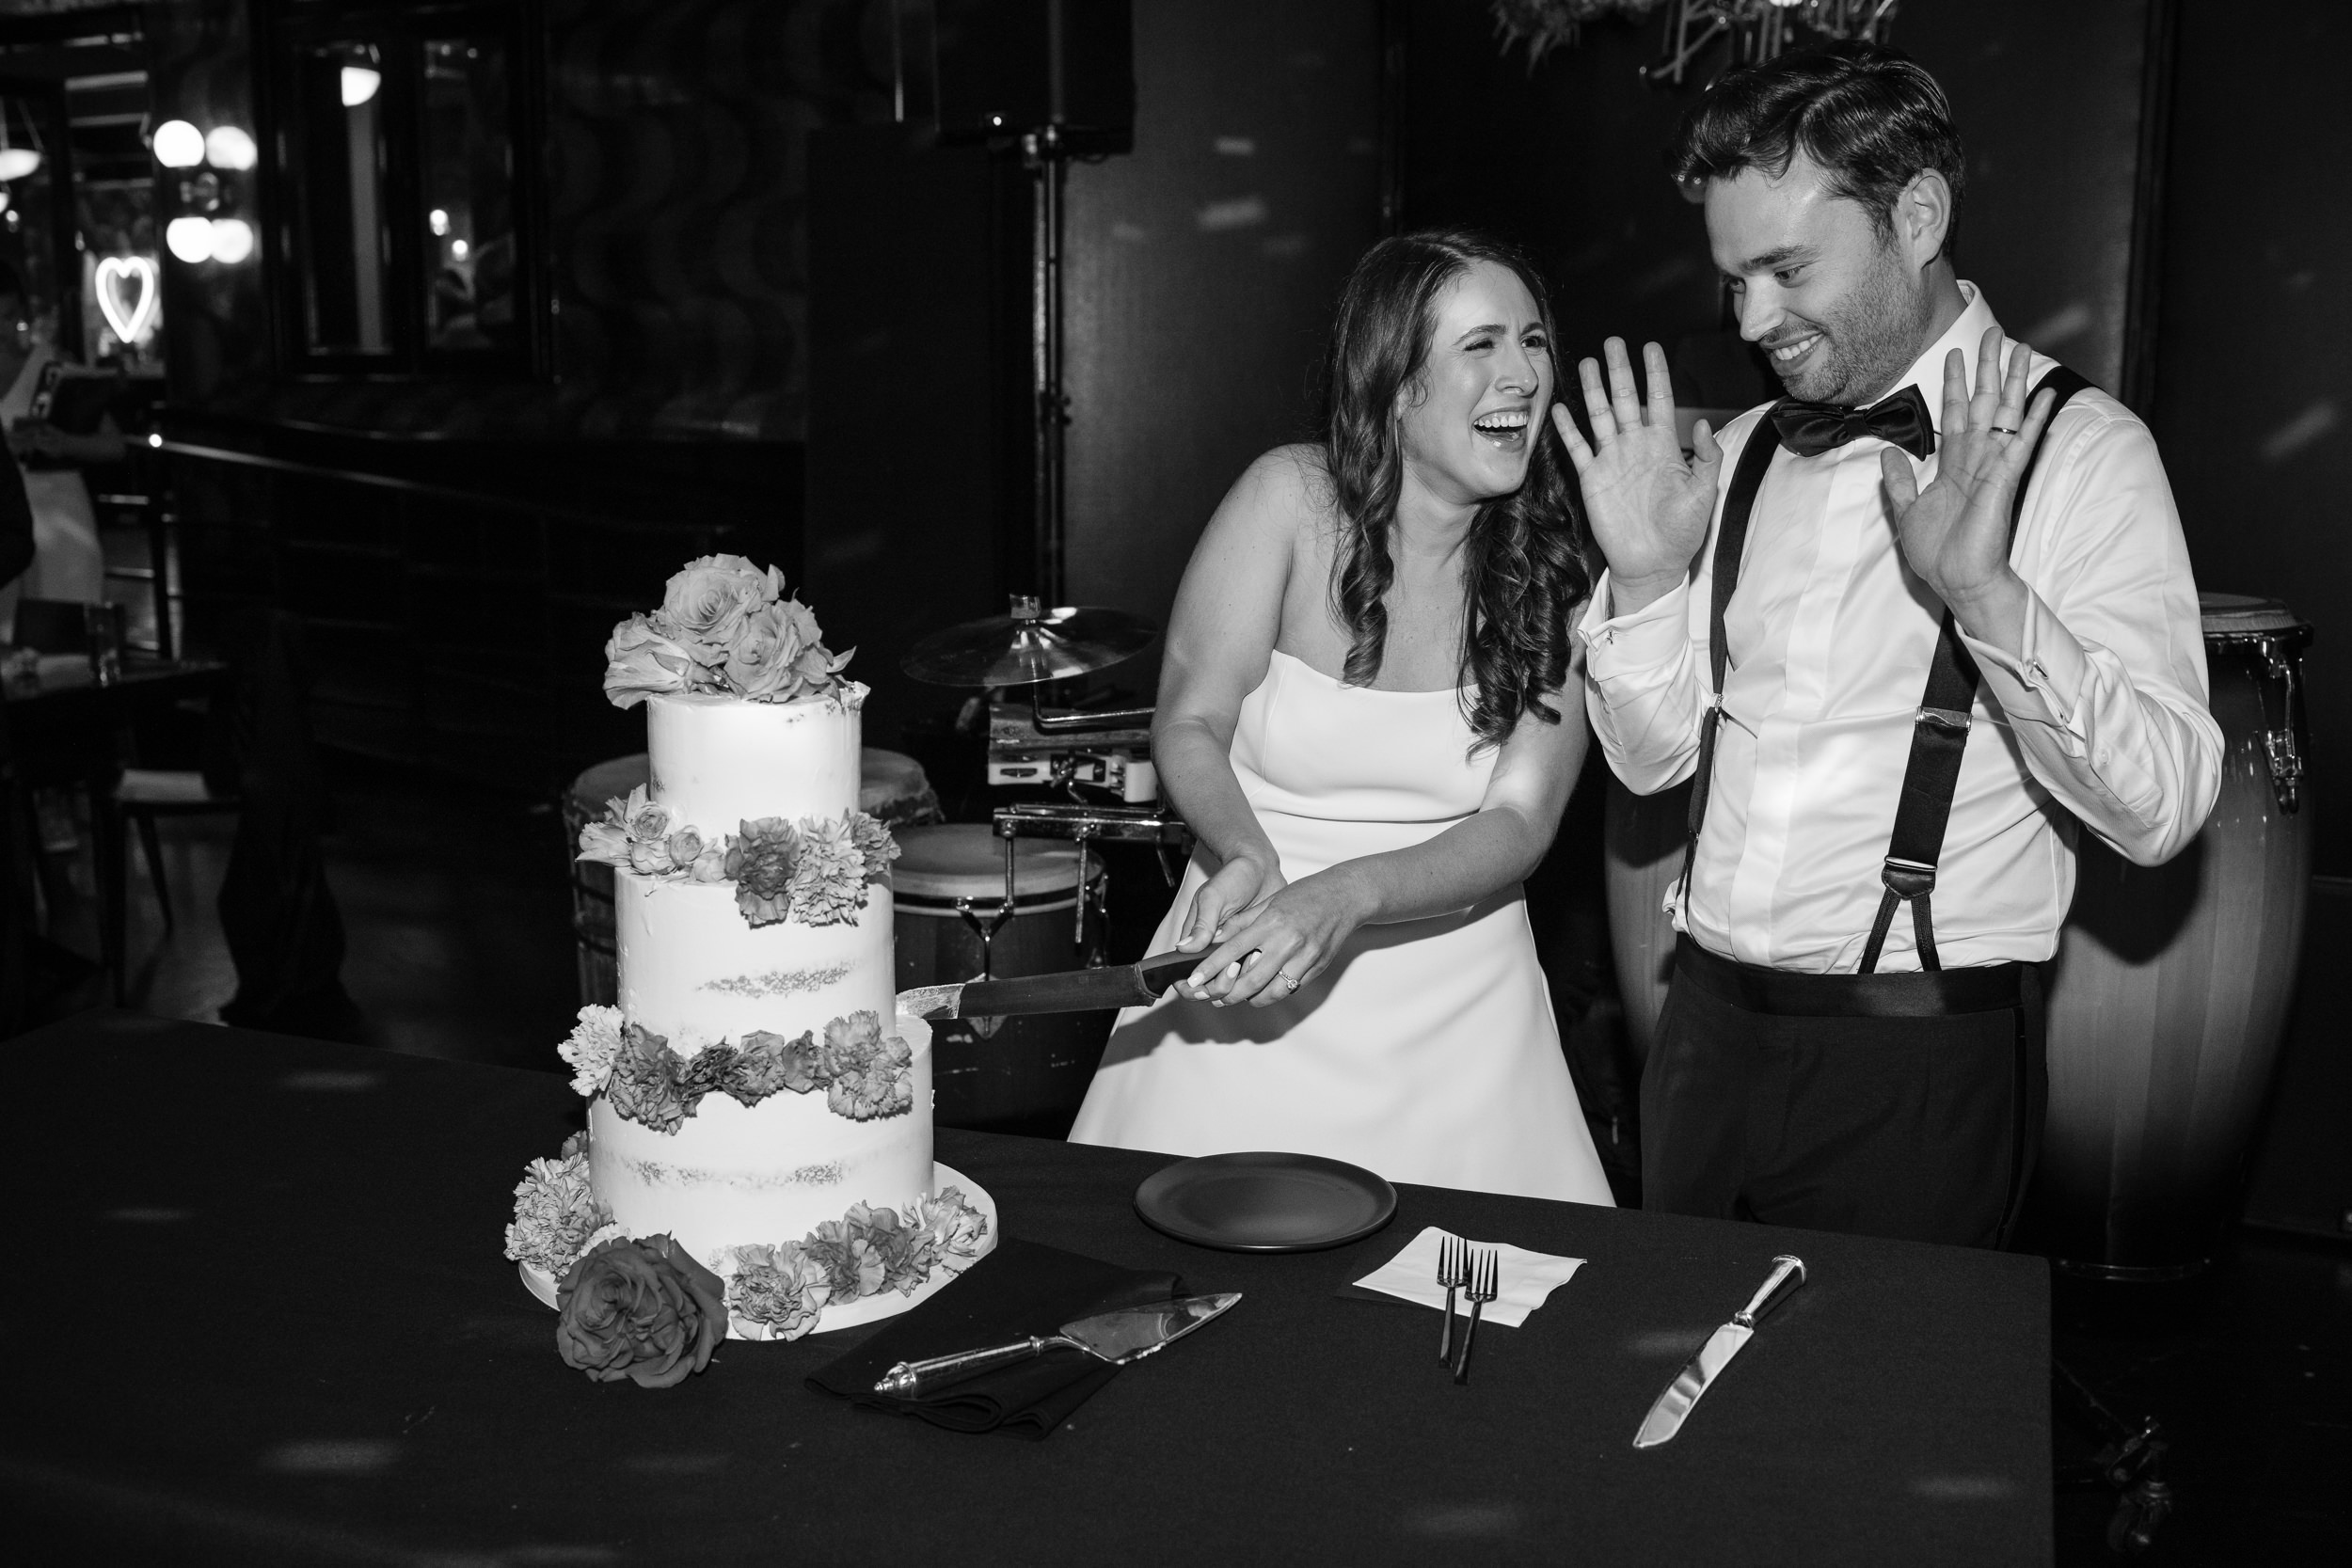 union wedding bride and groom cutting cake